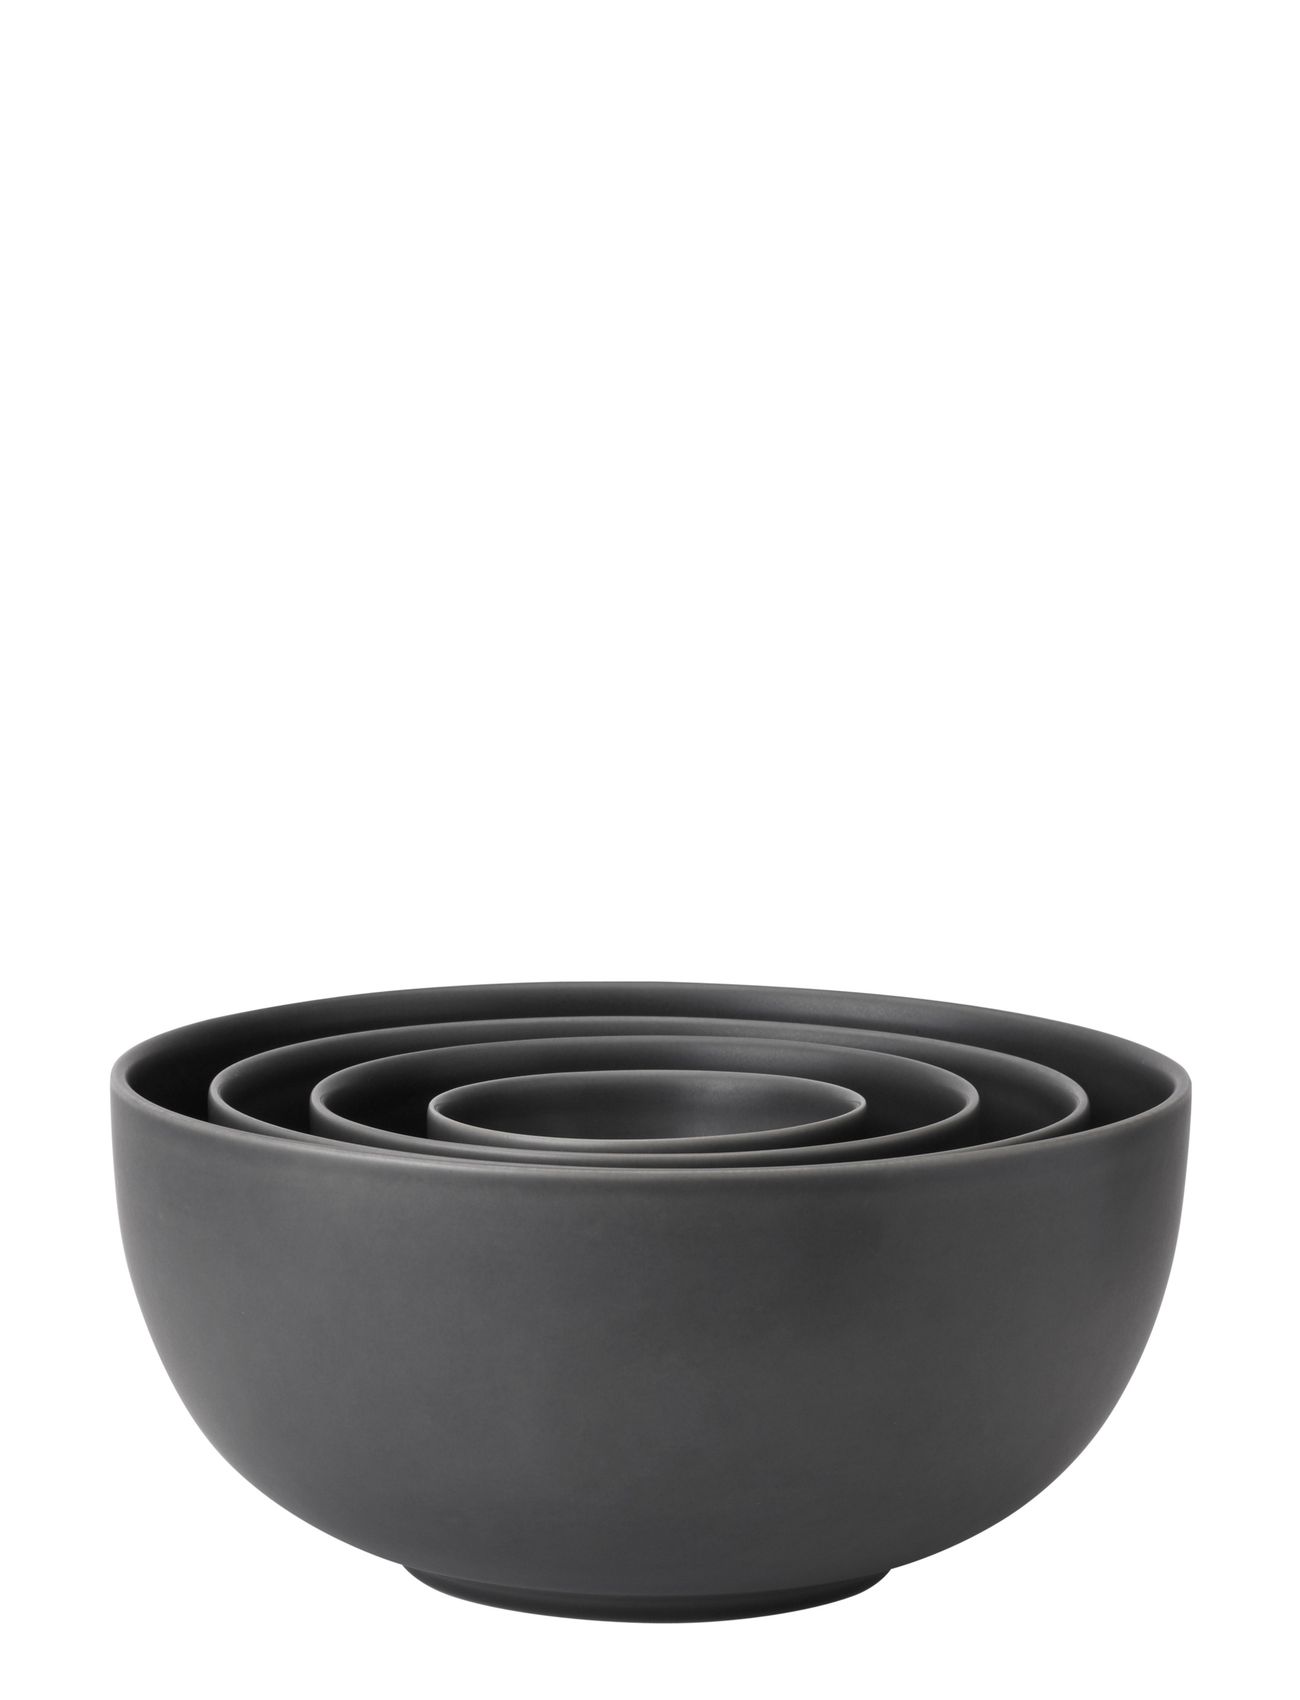 Knabstrup Keramik Tavola Skål-Sett Home Tableware Bowls Serving Bowls Grå Knabstrup Keramik